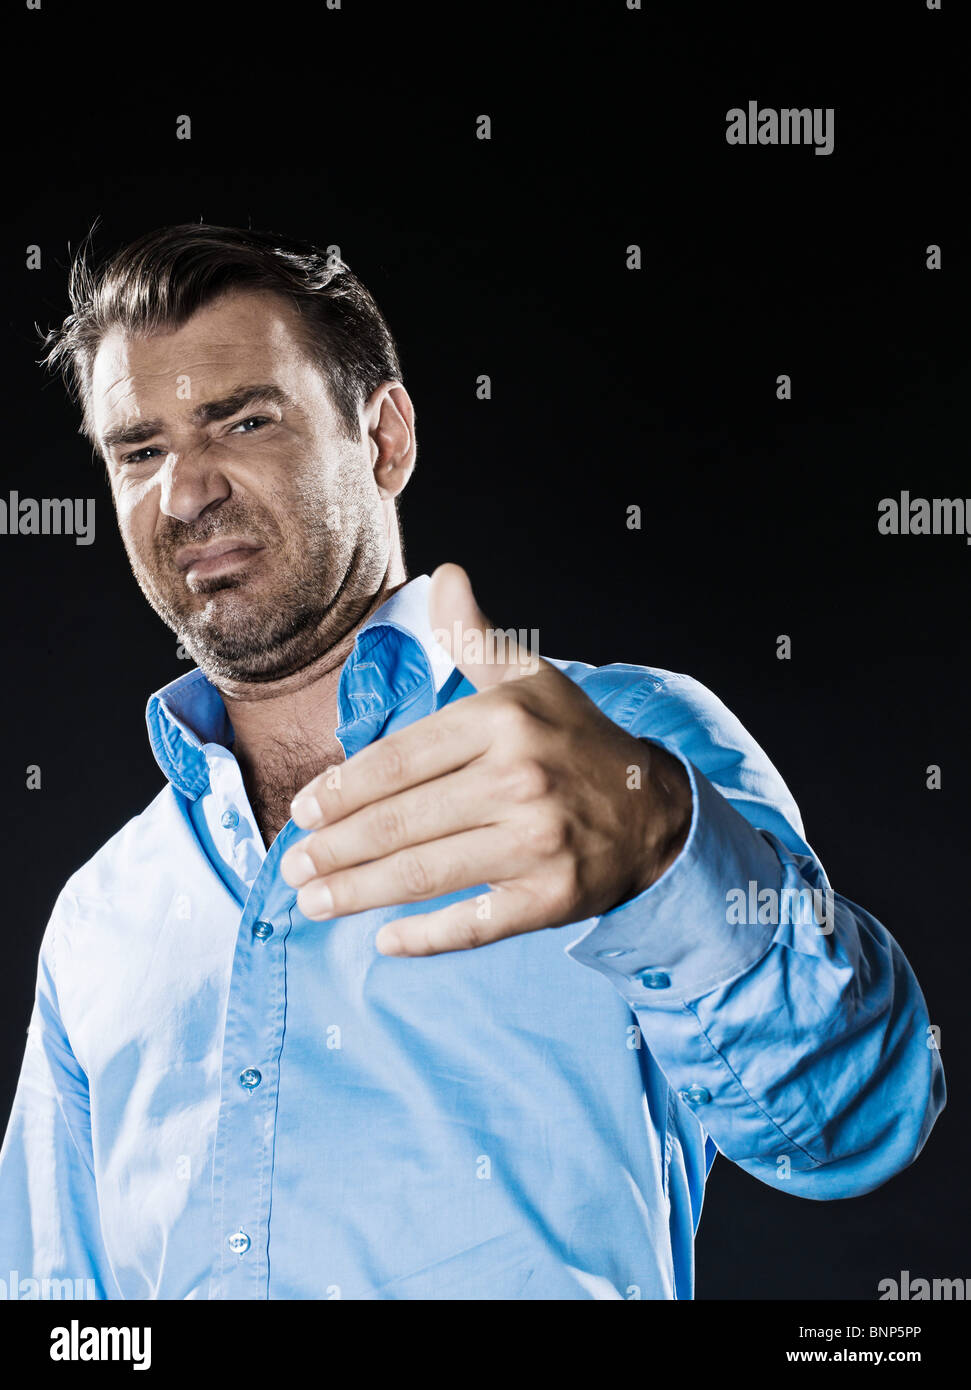 caucasian man unshaven reject unpleasant smell portrait isolated studio on black background Stock Photo